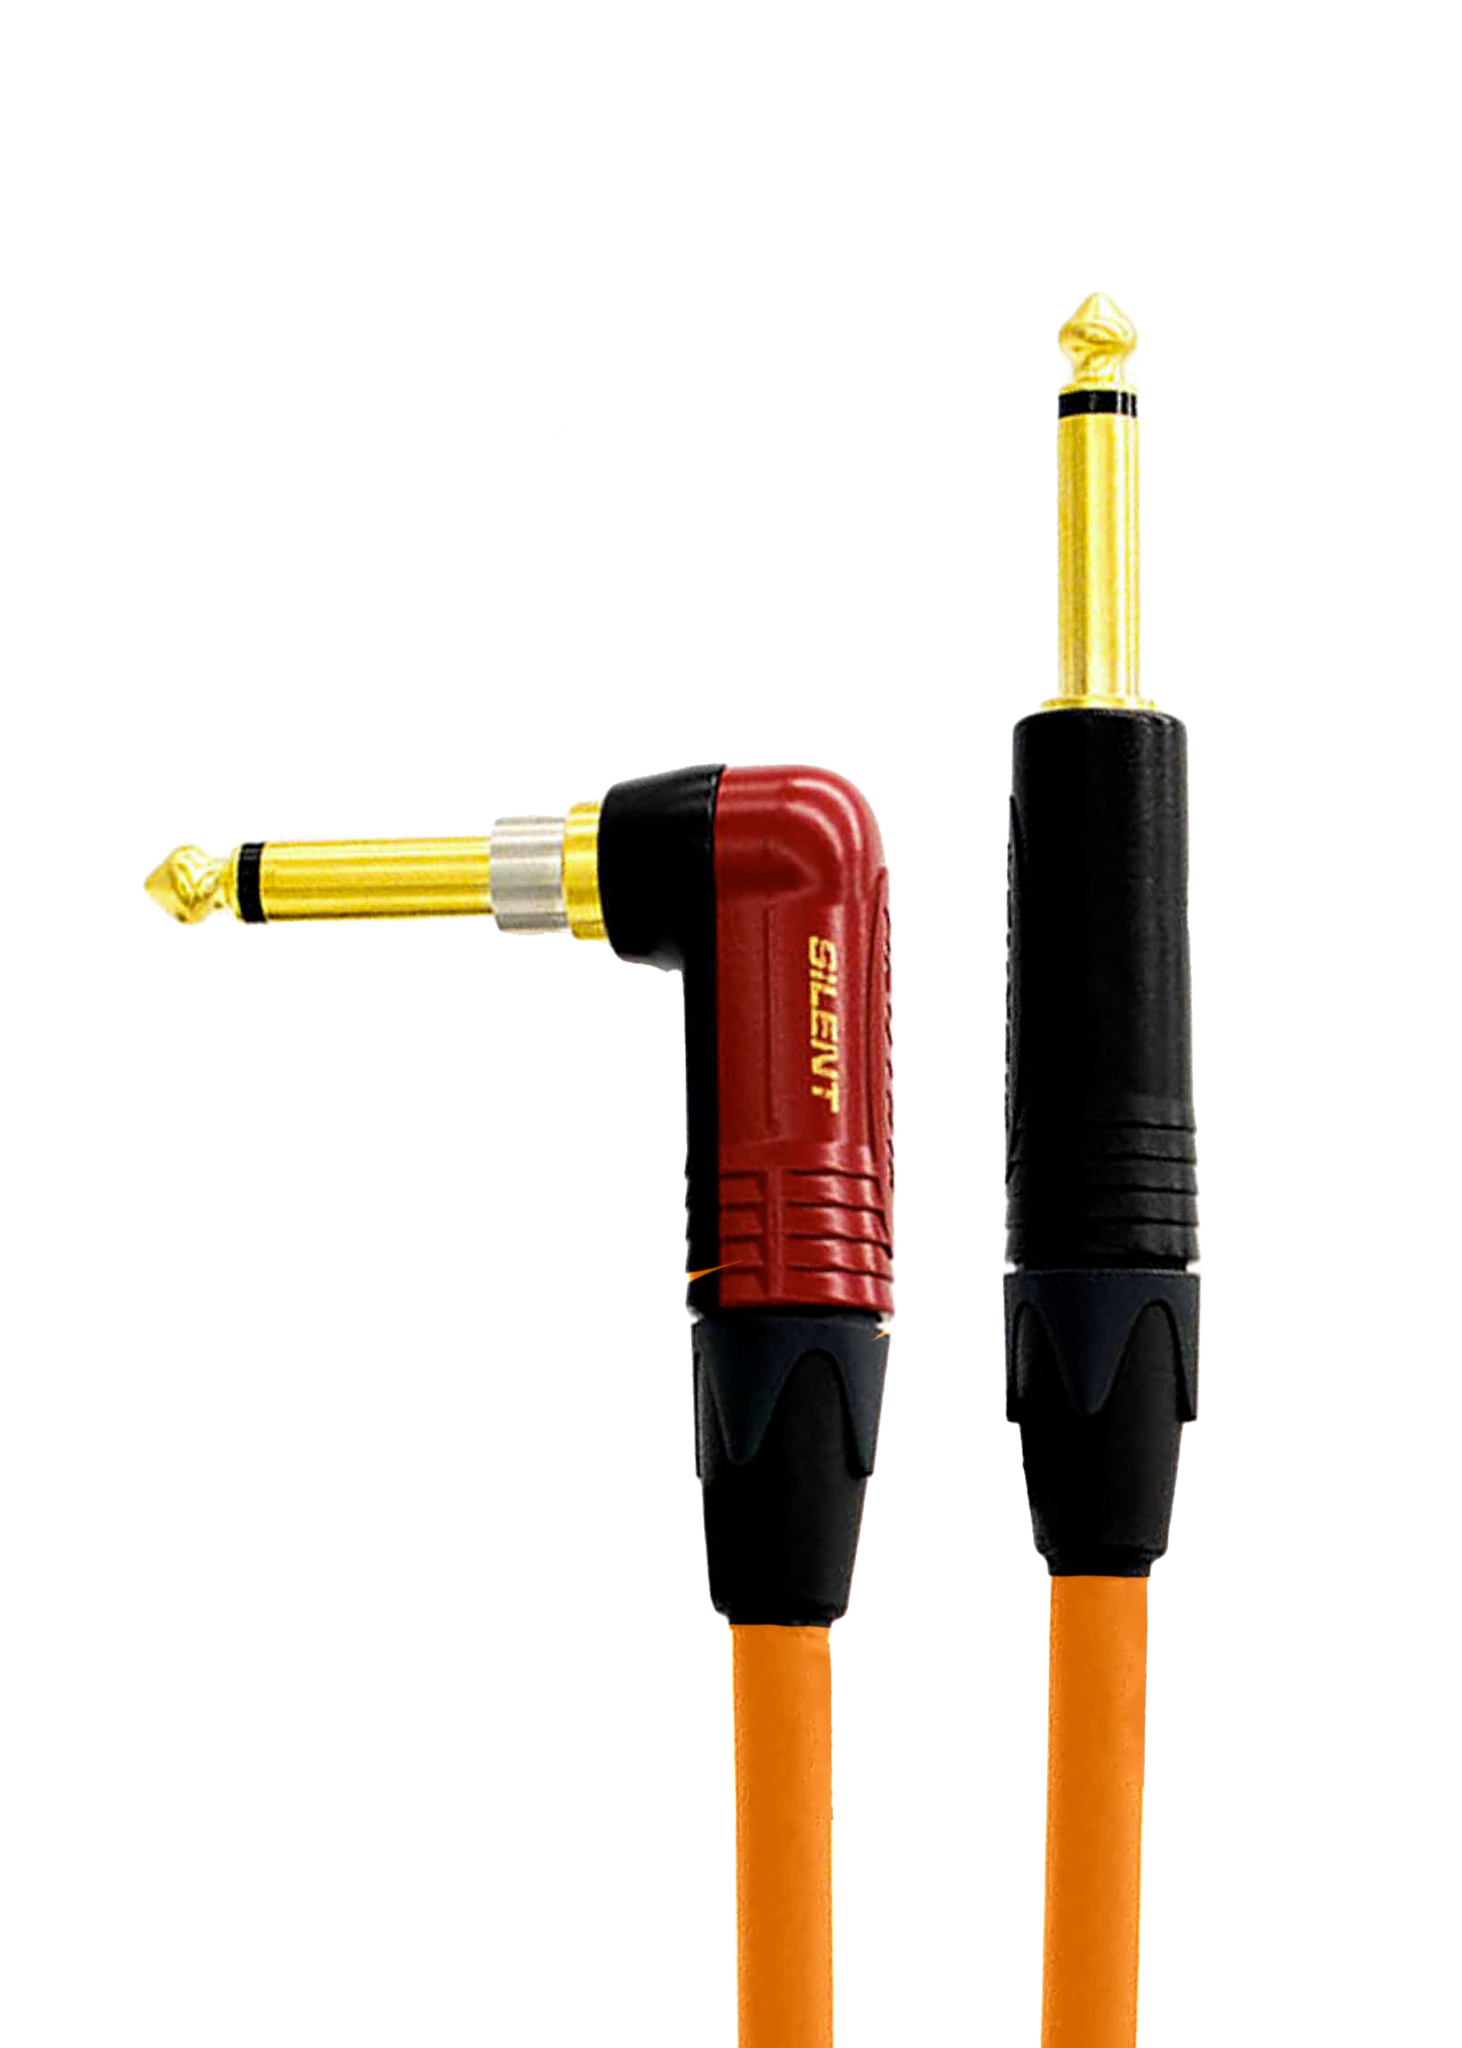 Van Damme Cable with 1 Neutrik Straight Plug, 1 Neutrik Angle Silent Plug